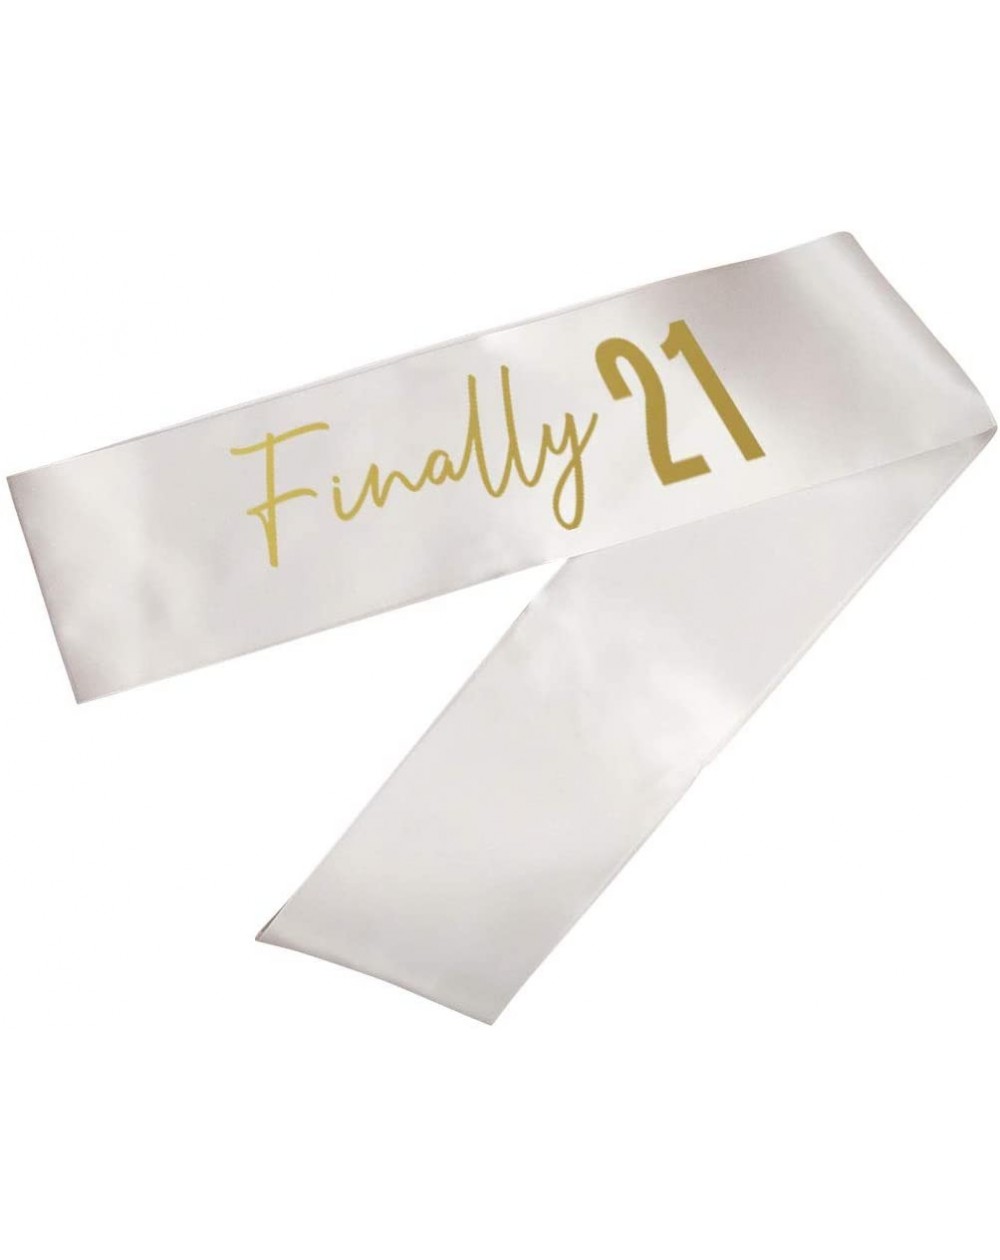 Favors Funny Birthday Party Sash Finally 21- Gold Foil Text- Satin White Ribbon- Includes Diamond Pin - Finally 21 - CQ19GD35...